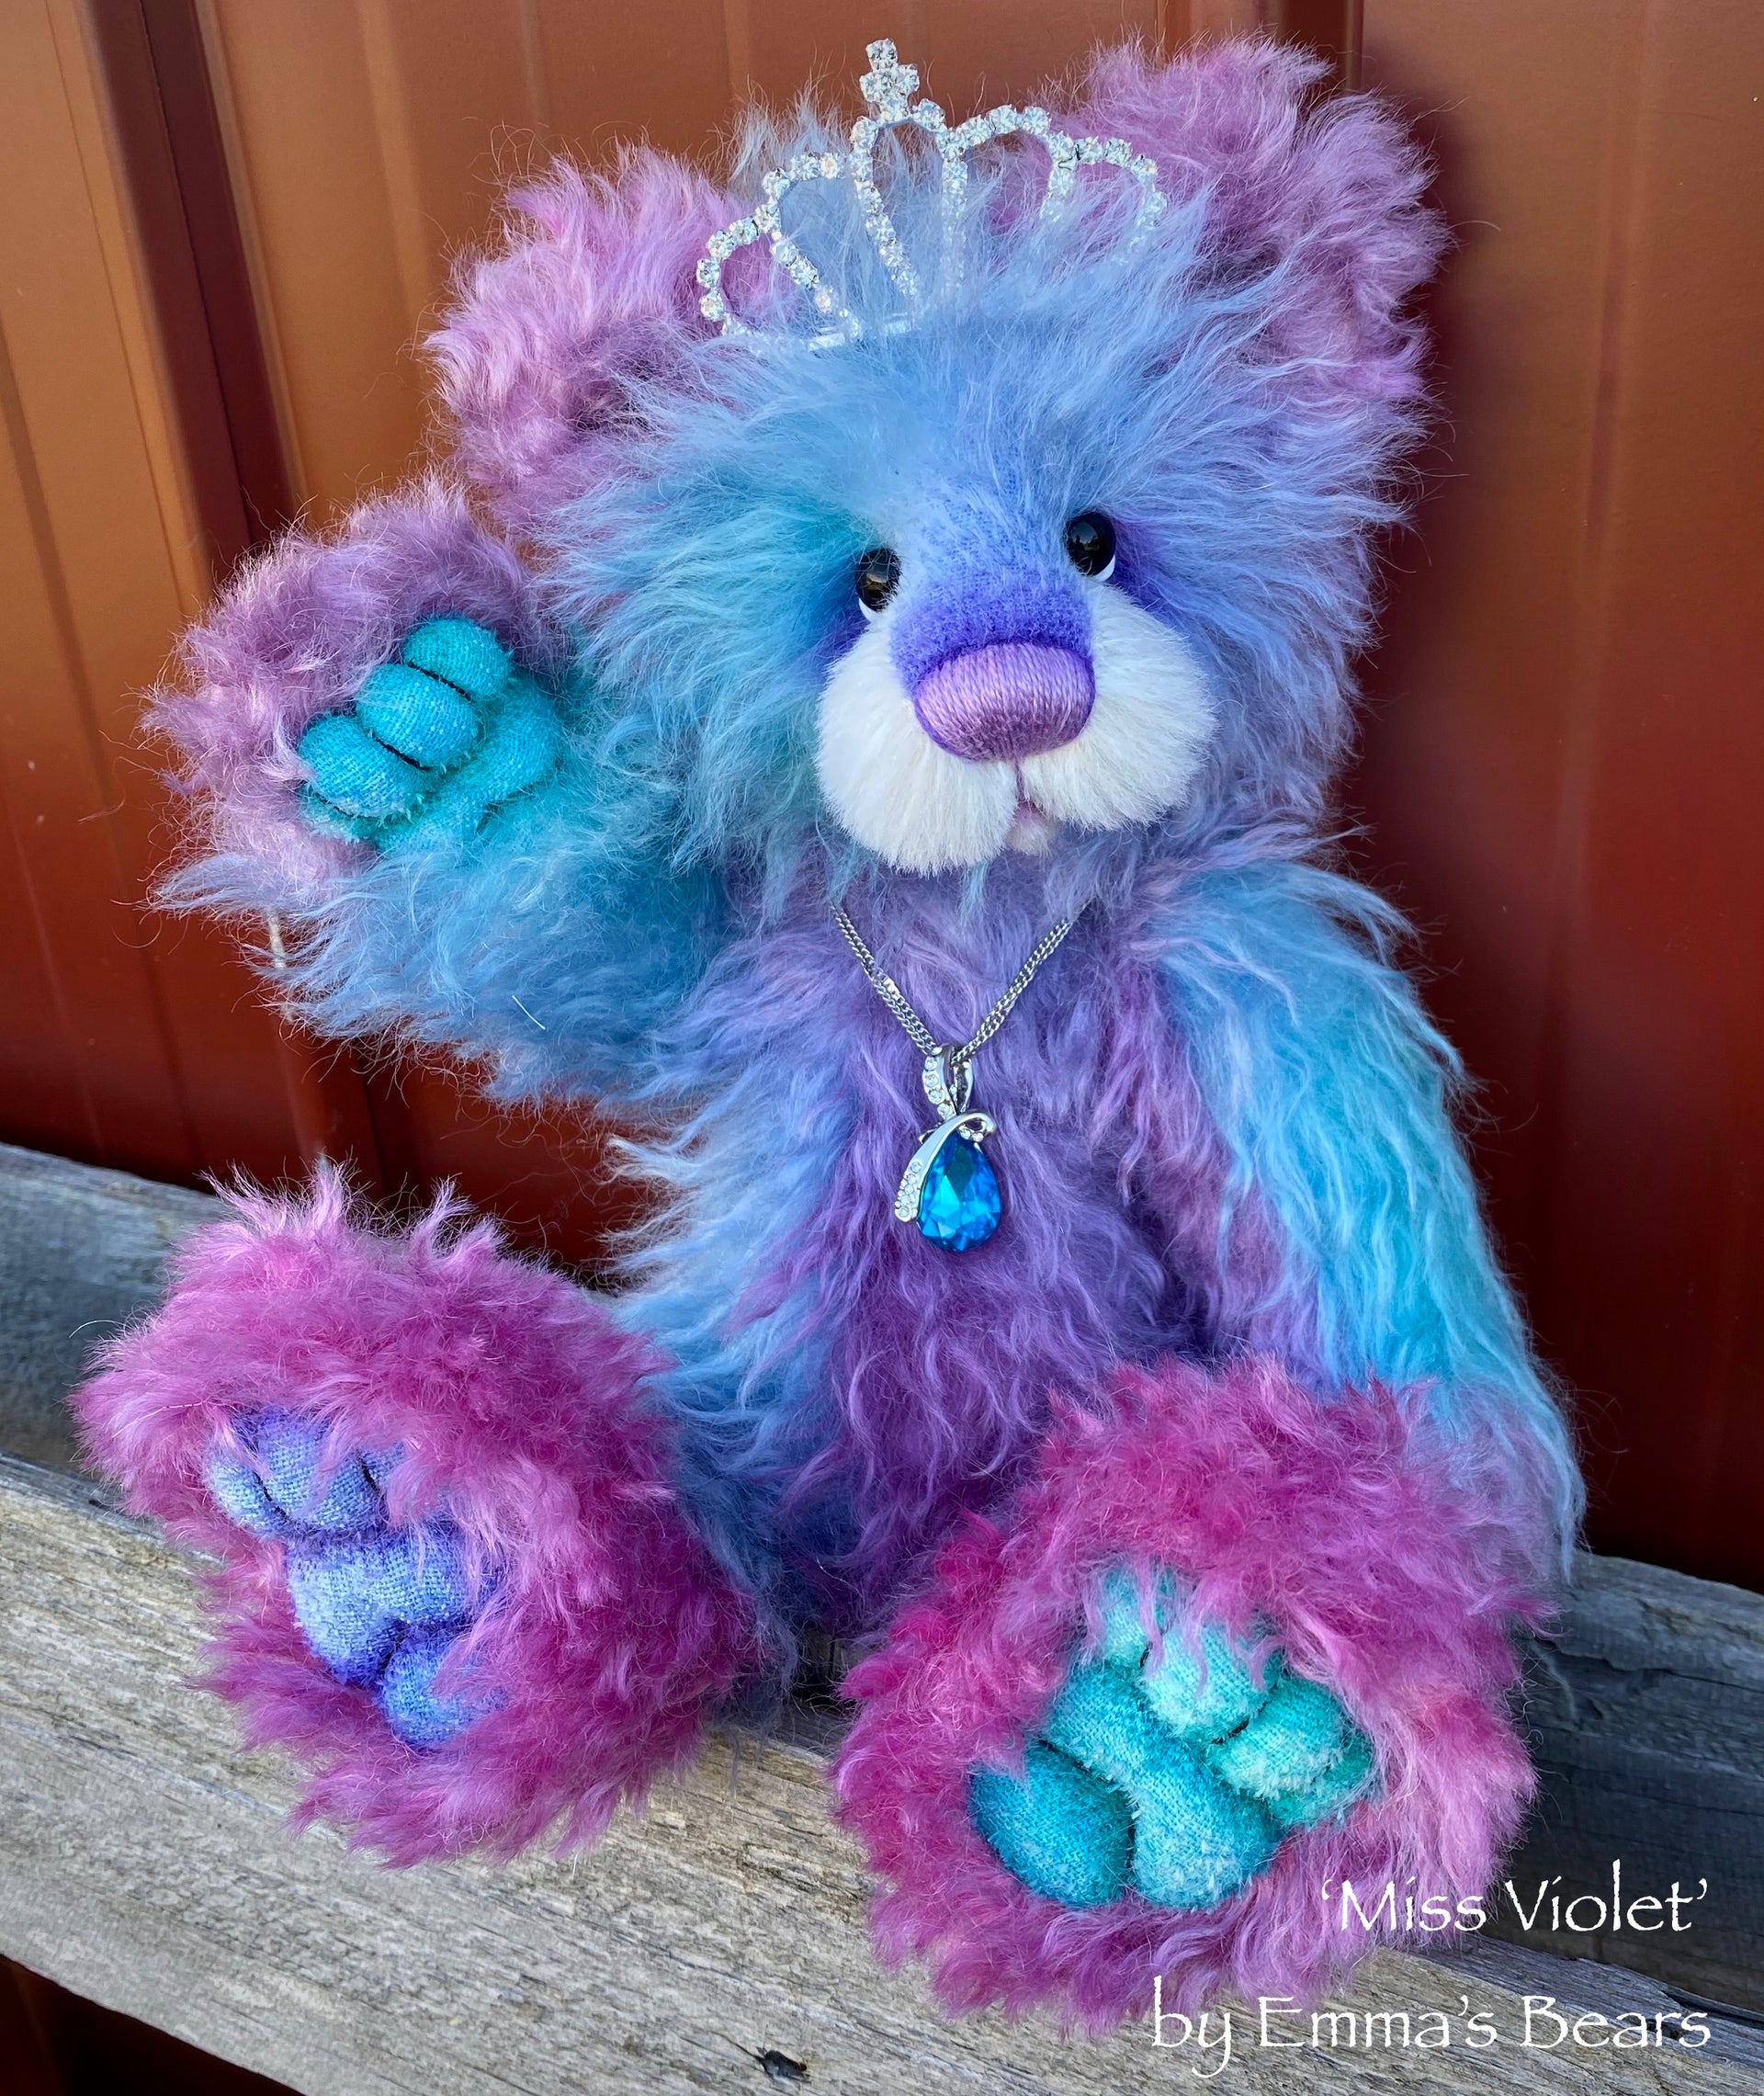 Miss Violet - 12" Mohair and Alpaca Artist Bear by Emma's Bears - OOAK